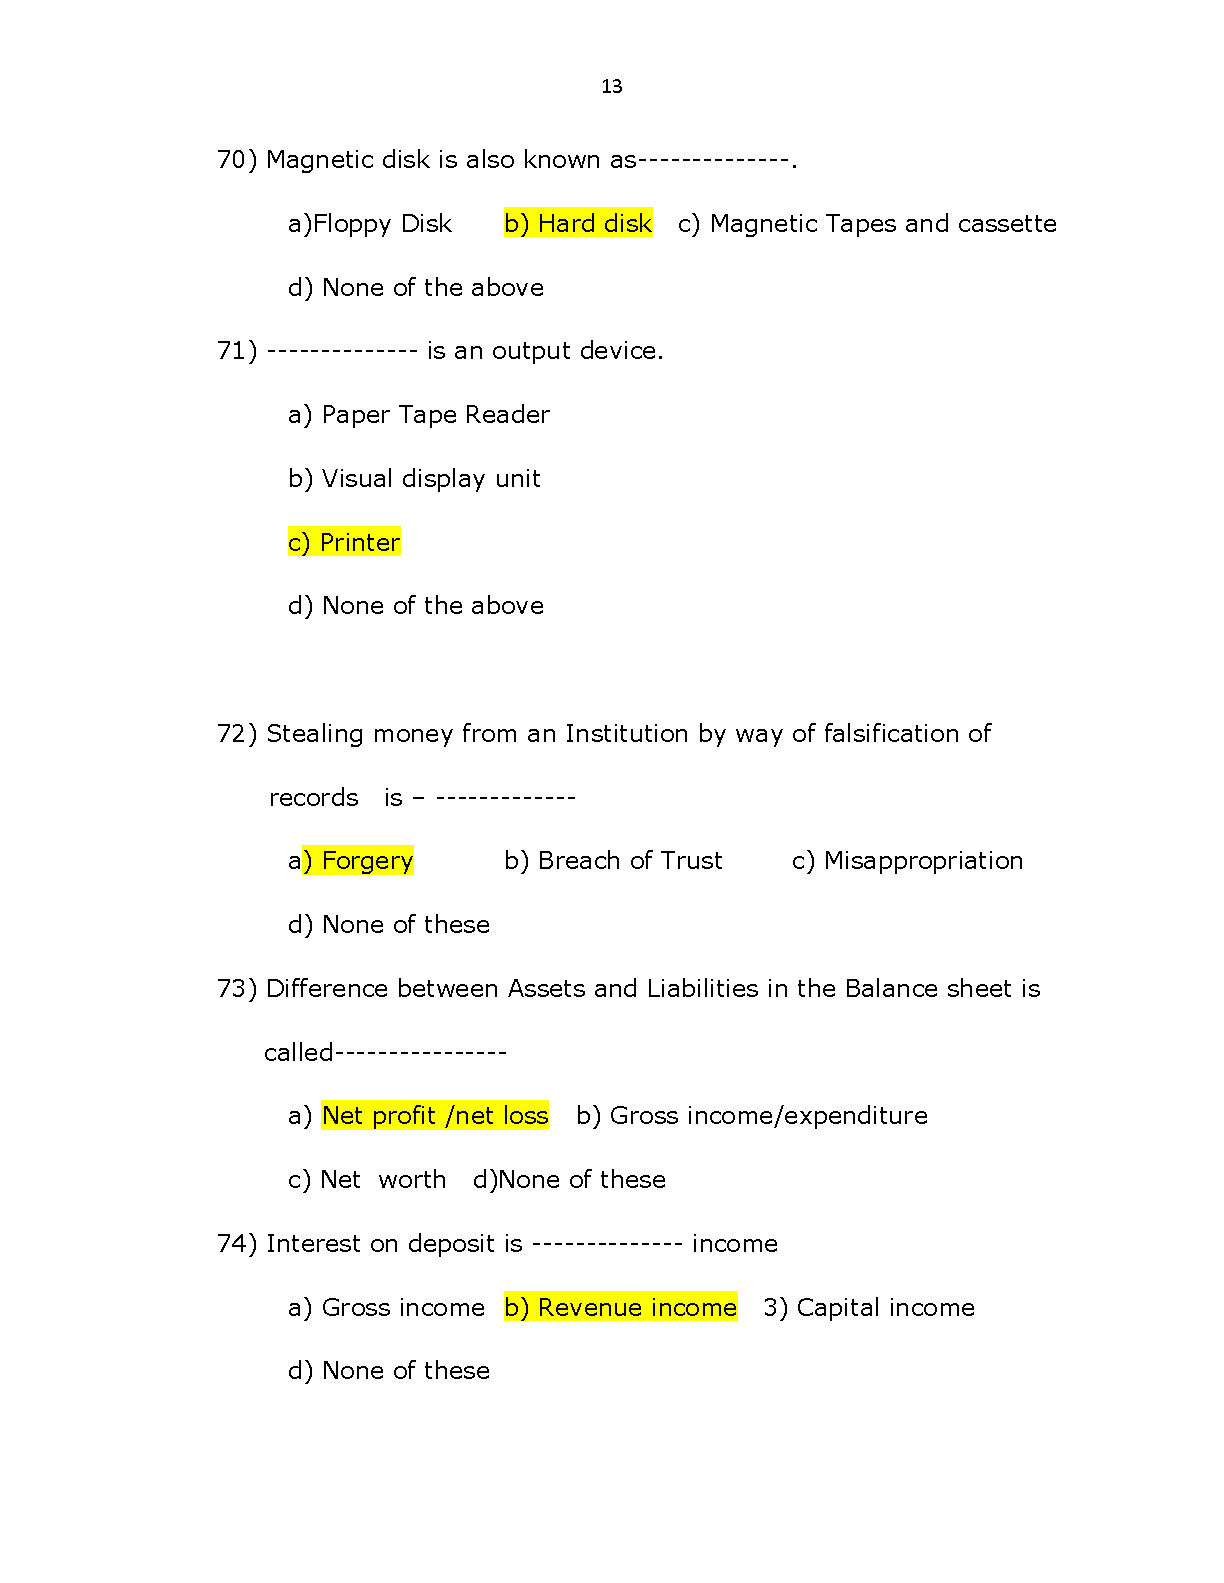 Kerala Co operative bank recruitment Sample Question Paper - Notification Image 13